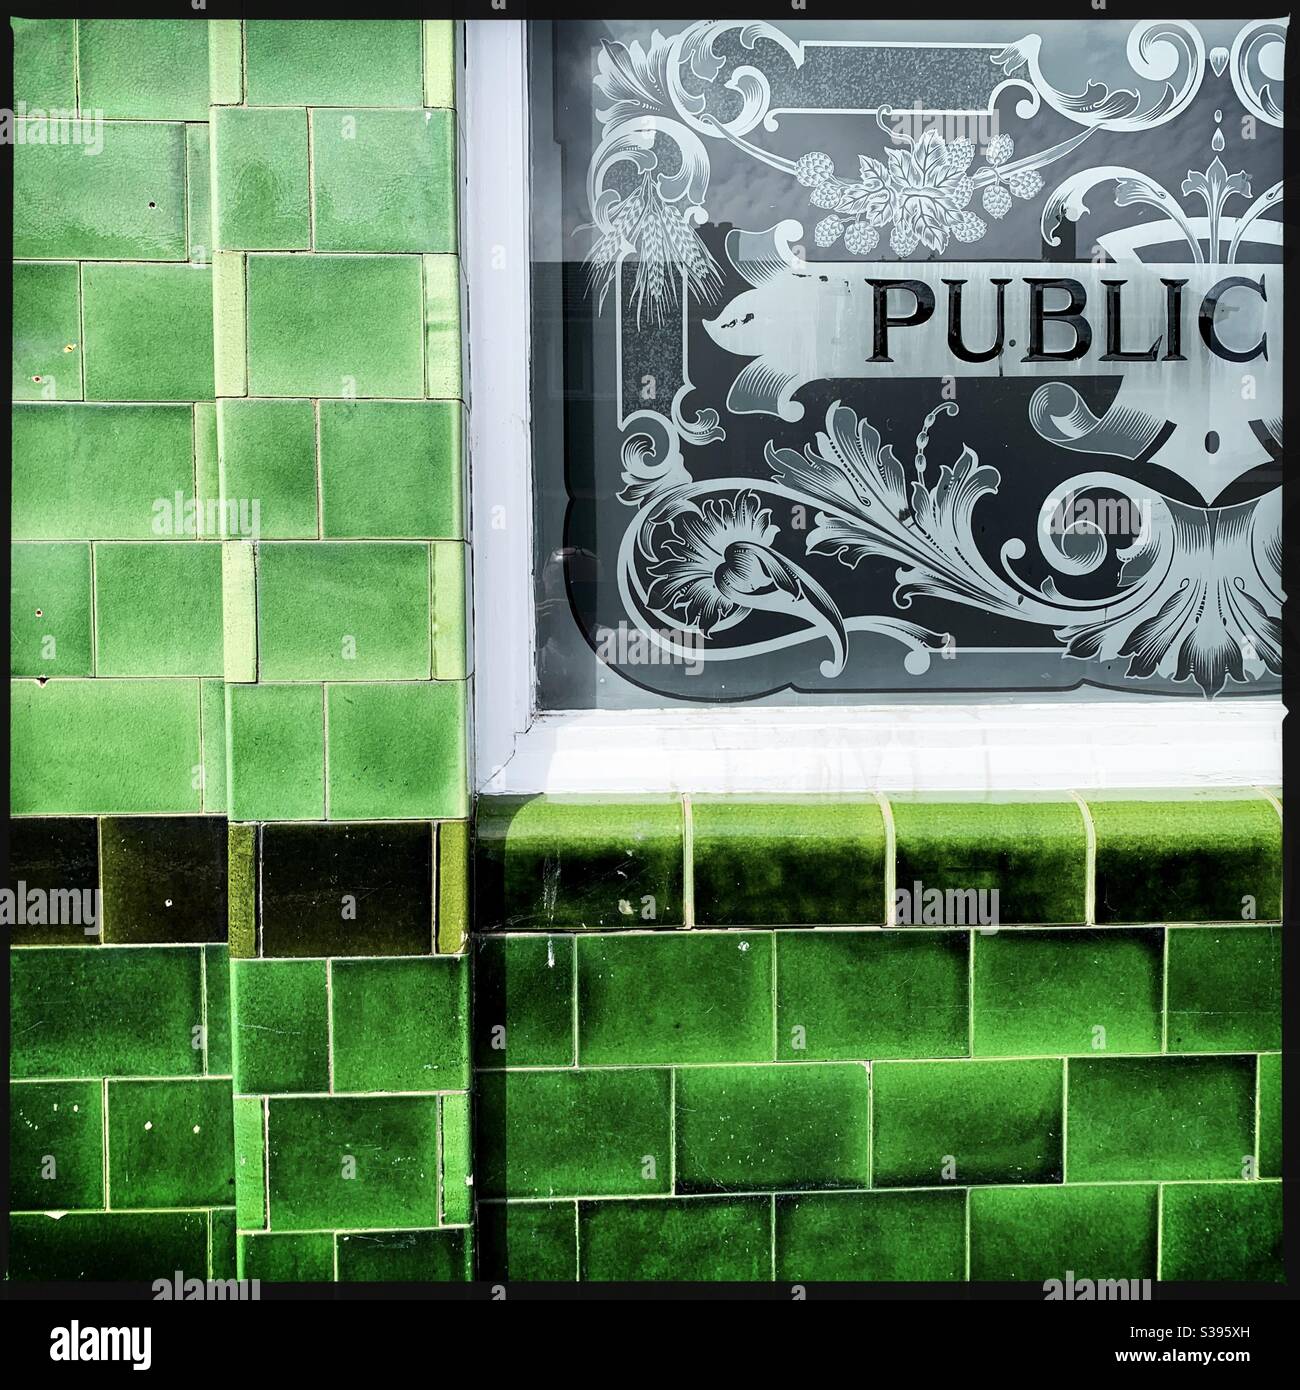 Pub exterior with green tiles Stock Photo